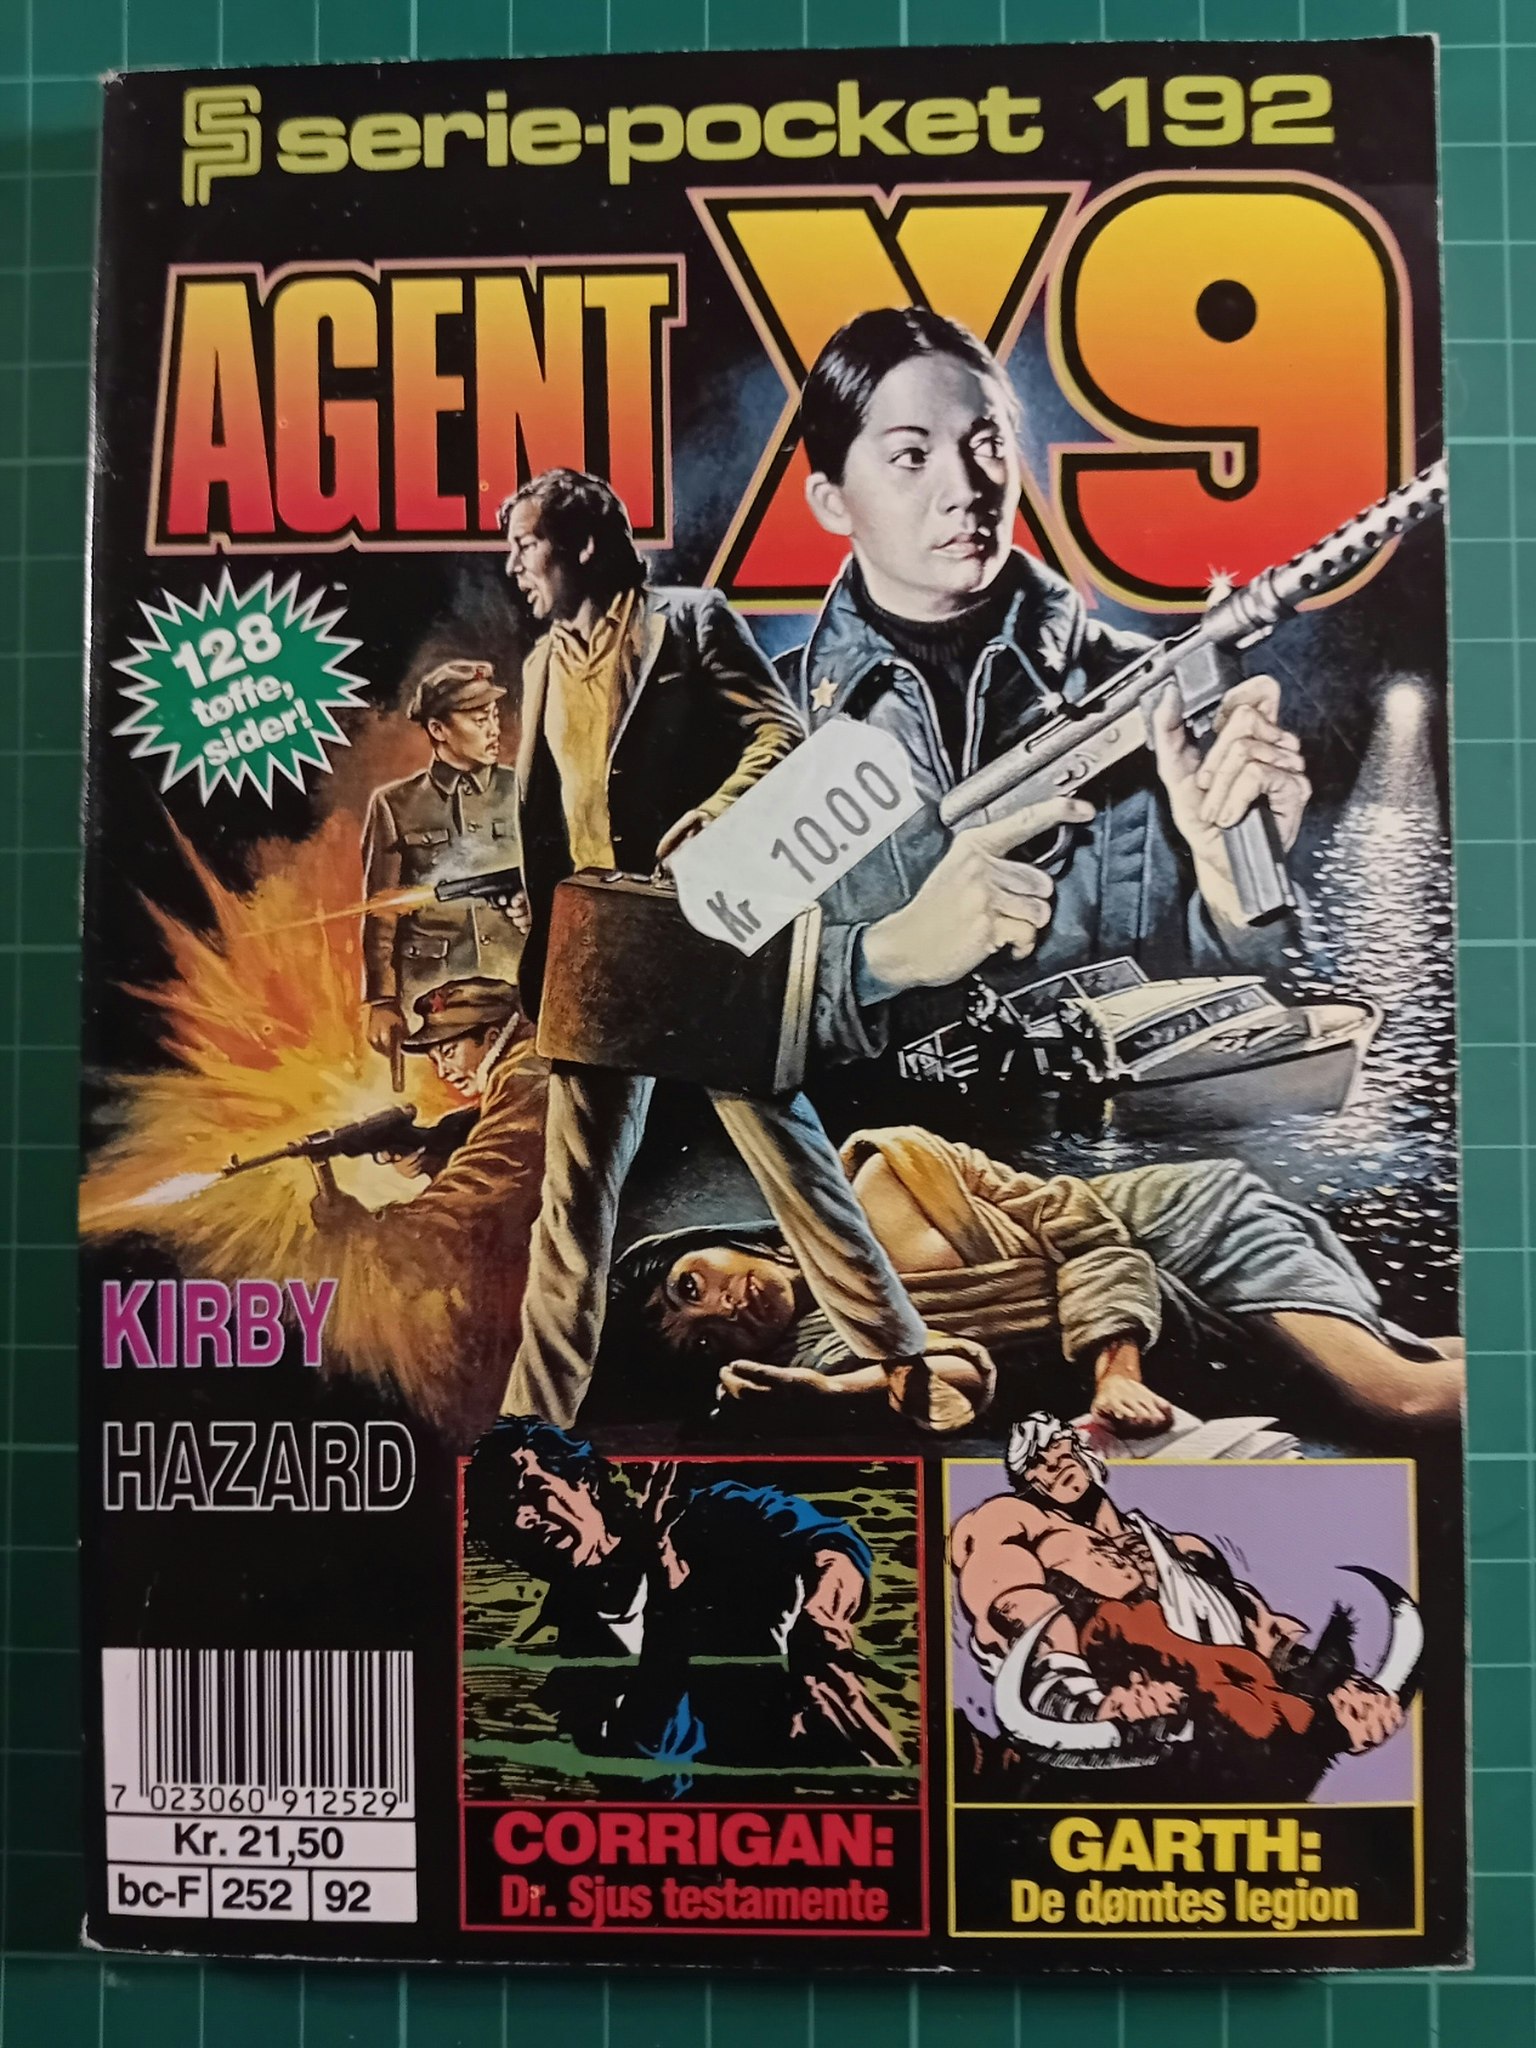 Serie-pocket 192 : Agent X9